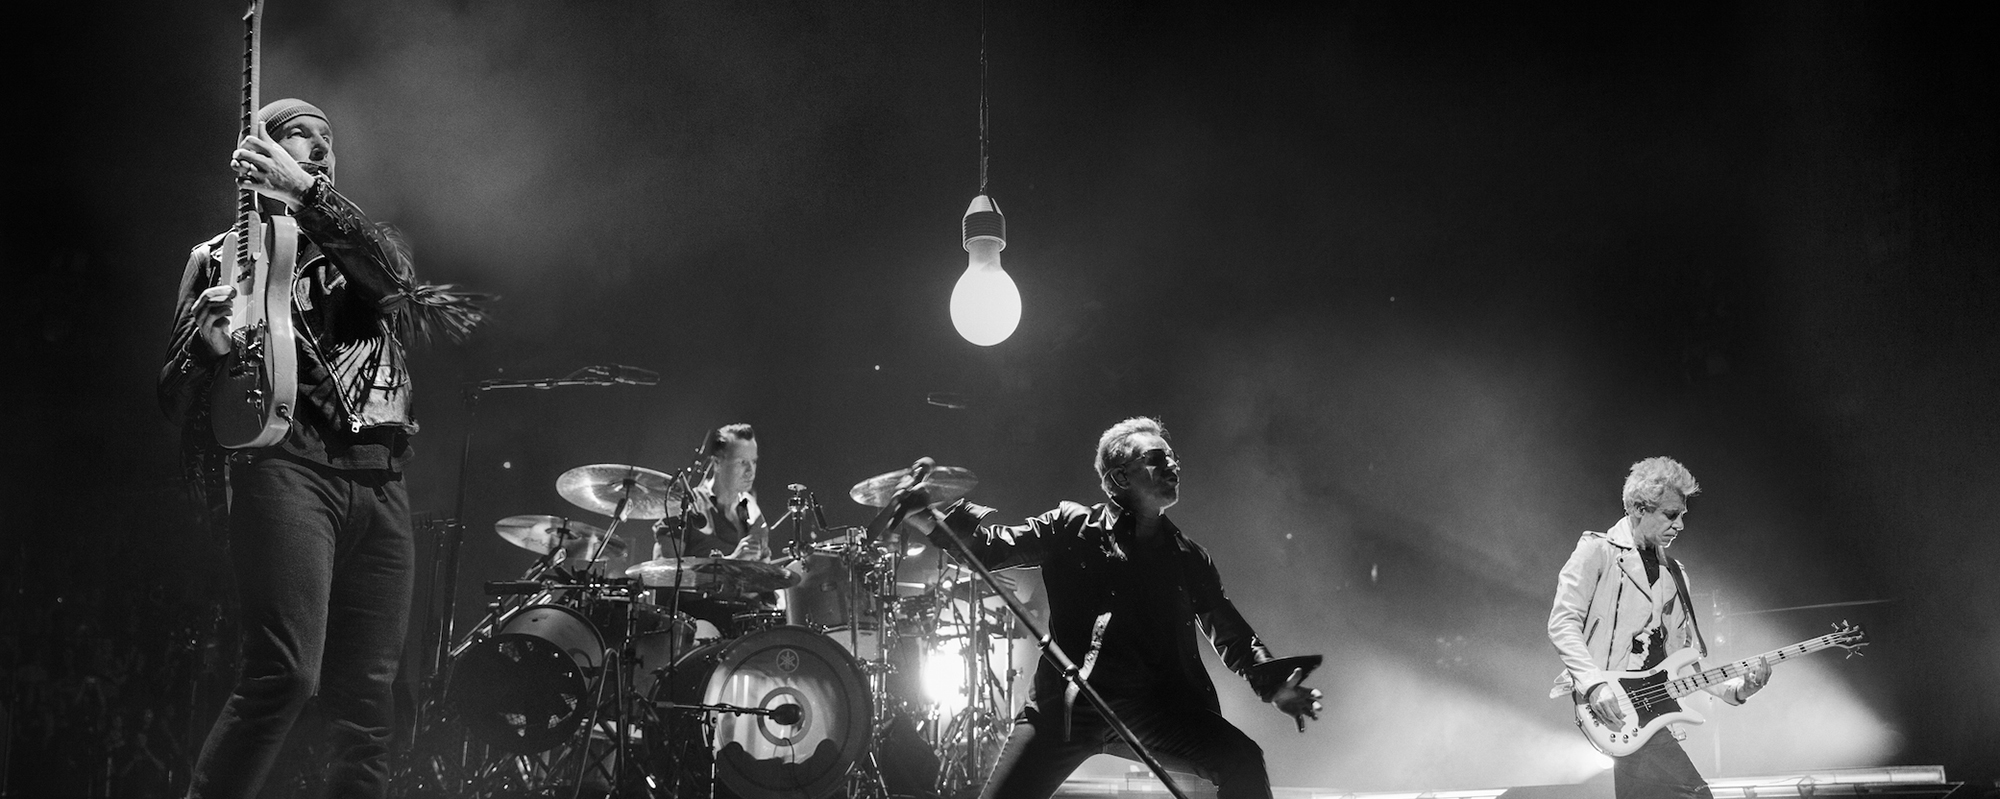 U2 Announces Dates For Innovative Las Vegas Show at Sphere